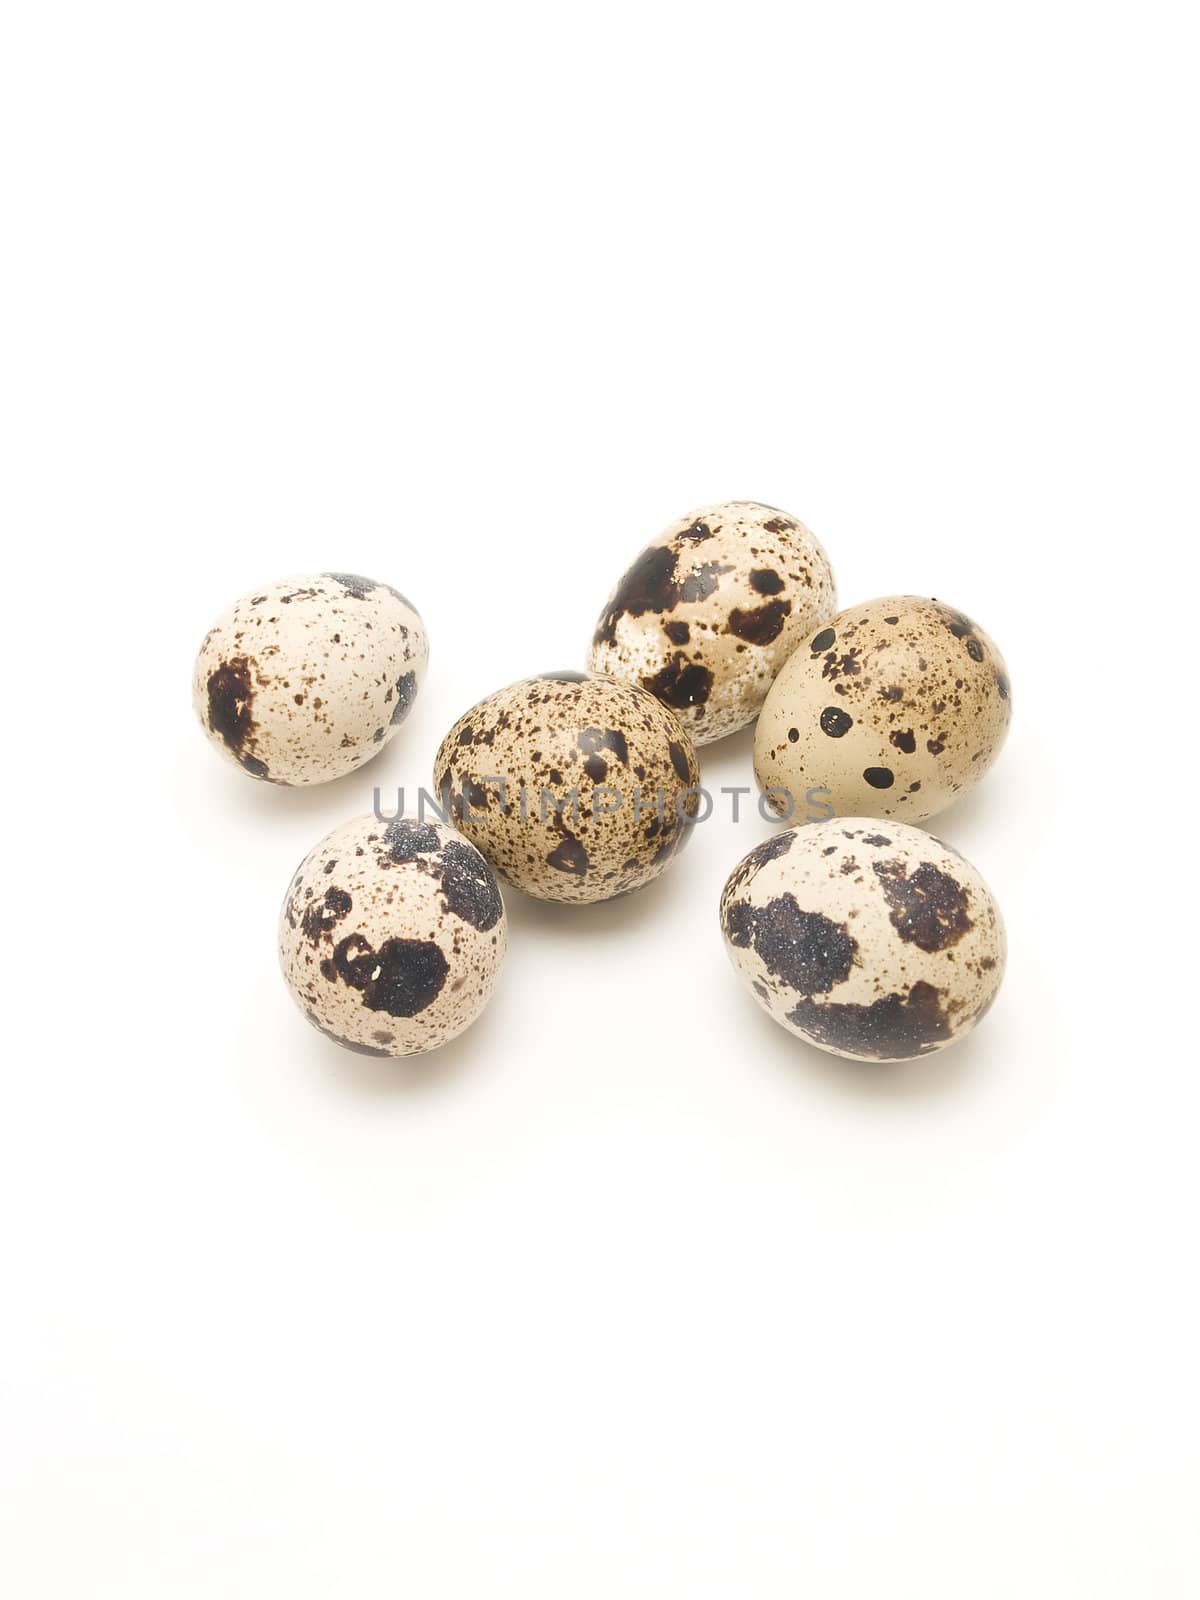 quail eggs by lauria